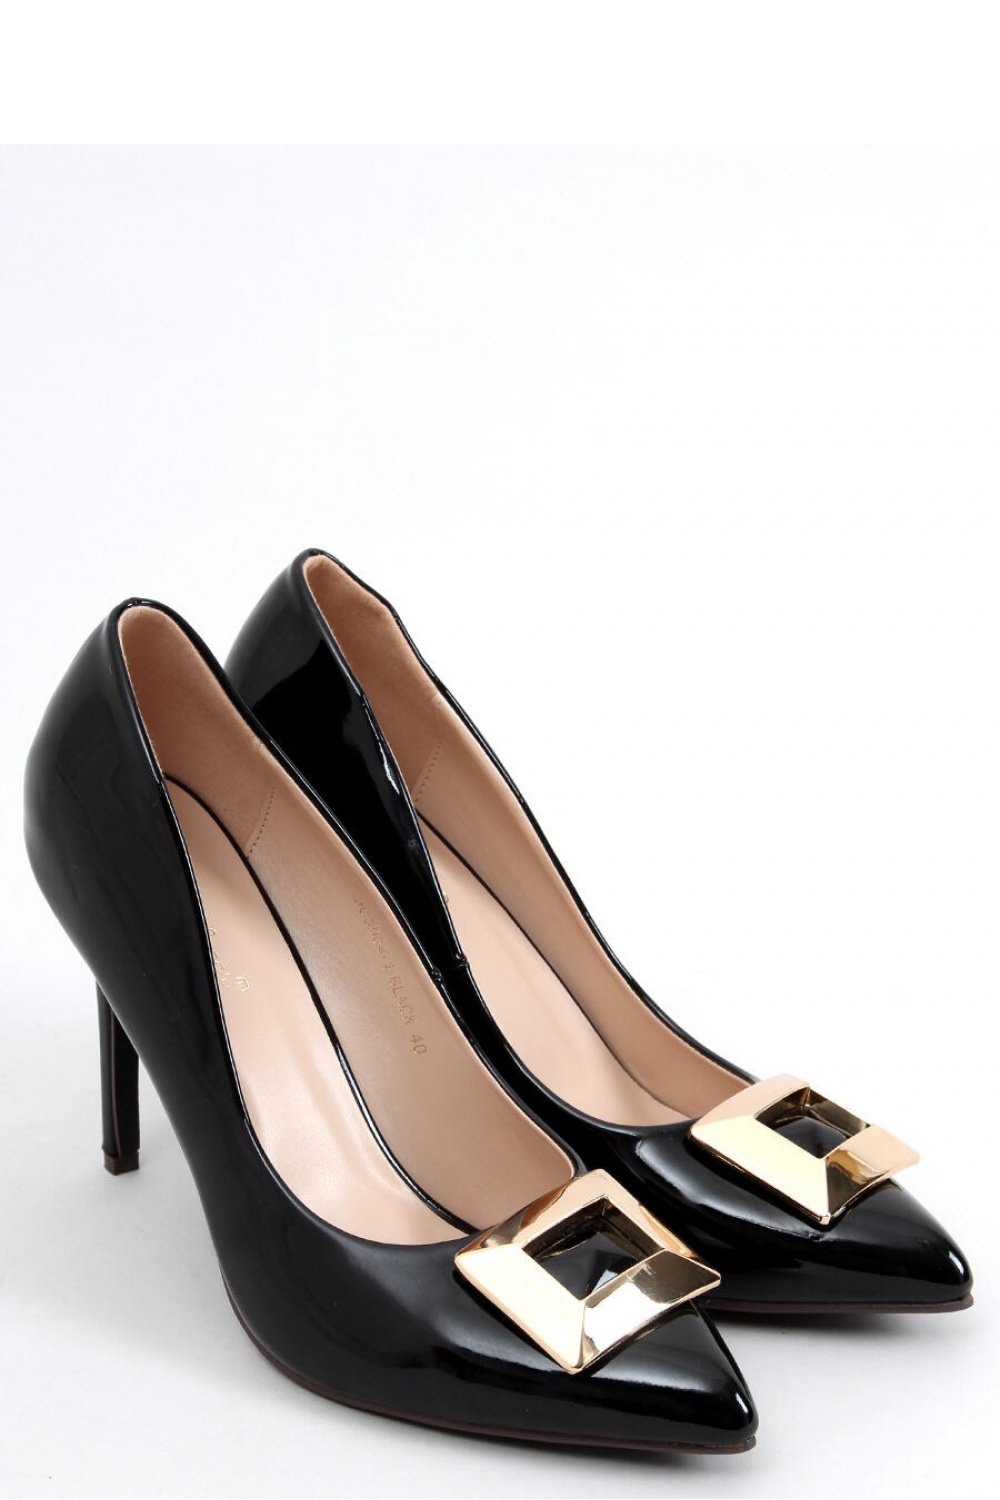 High heels model 166541 Inello Posh Styles Apparel